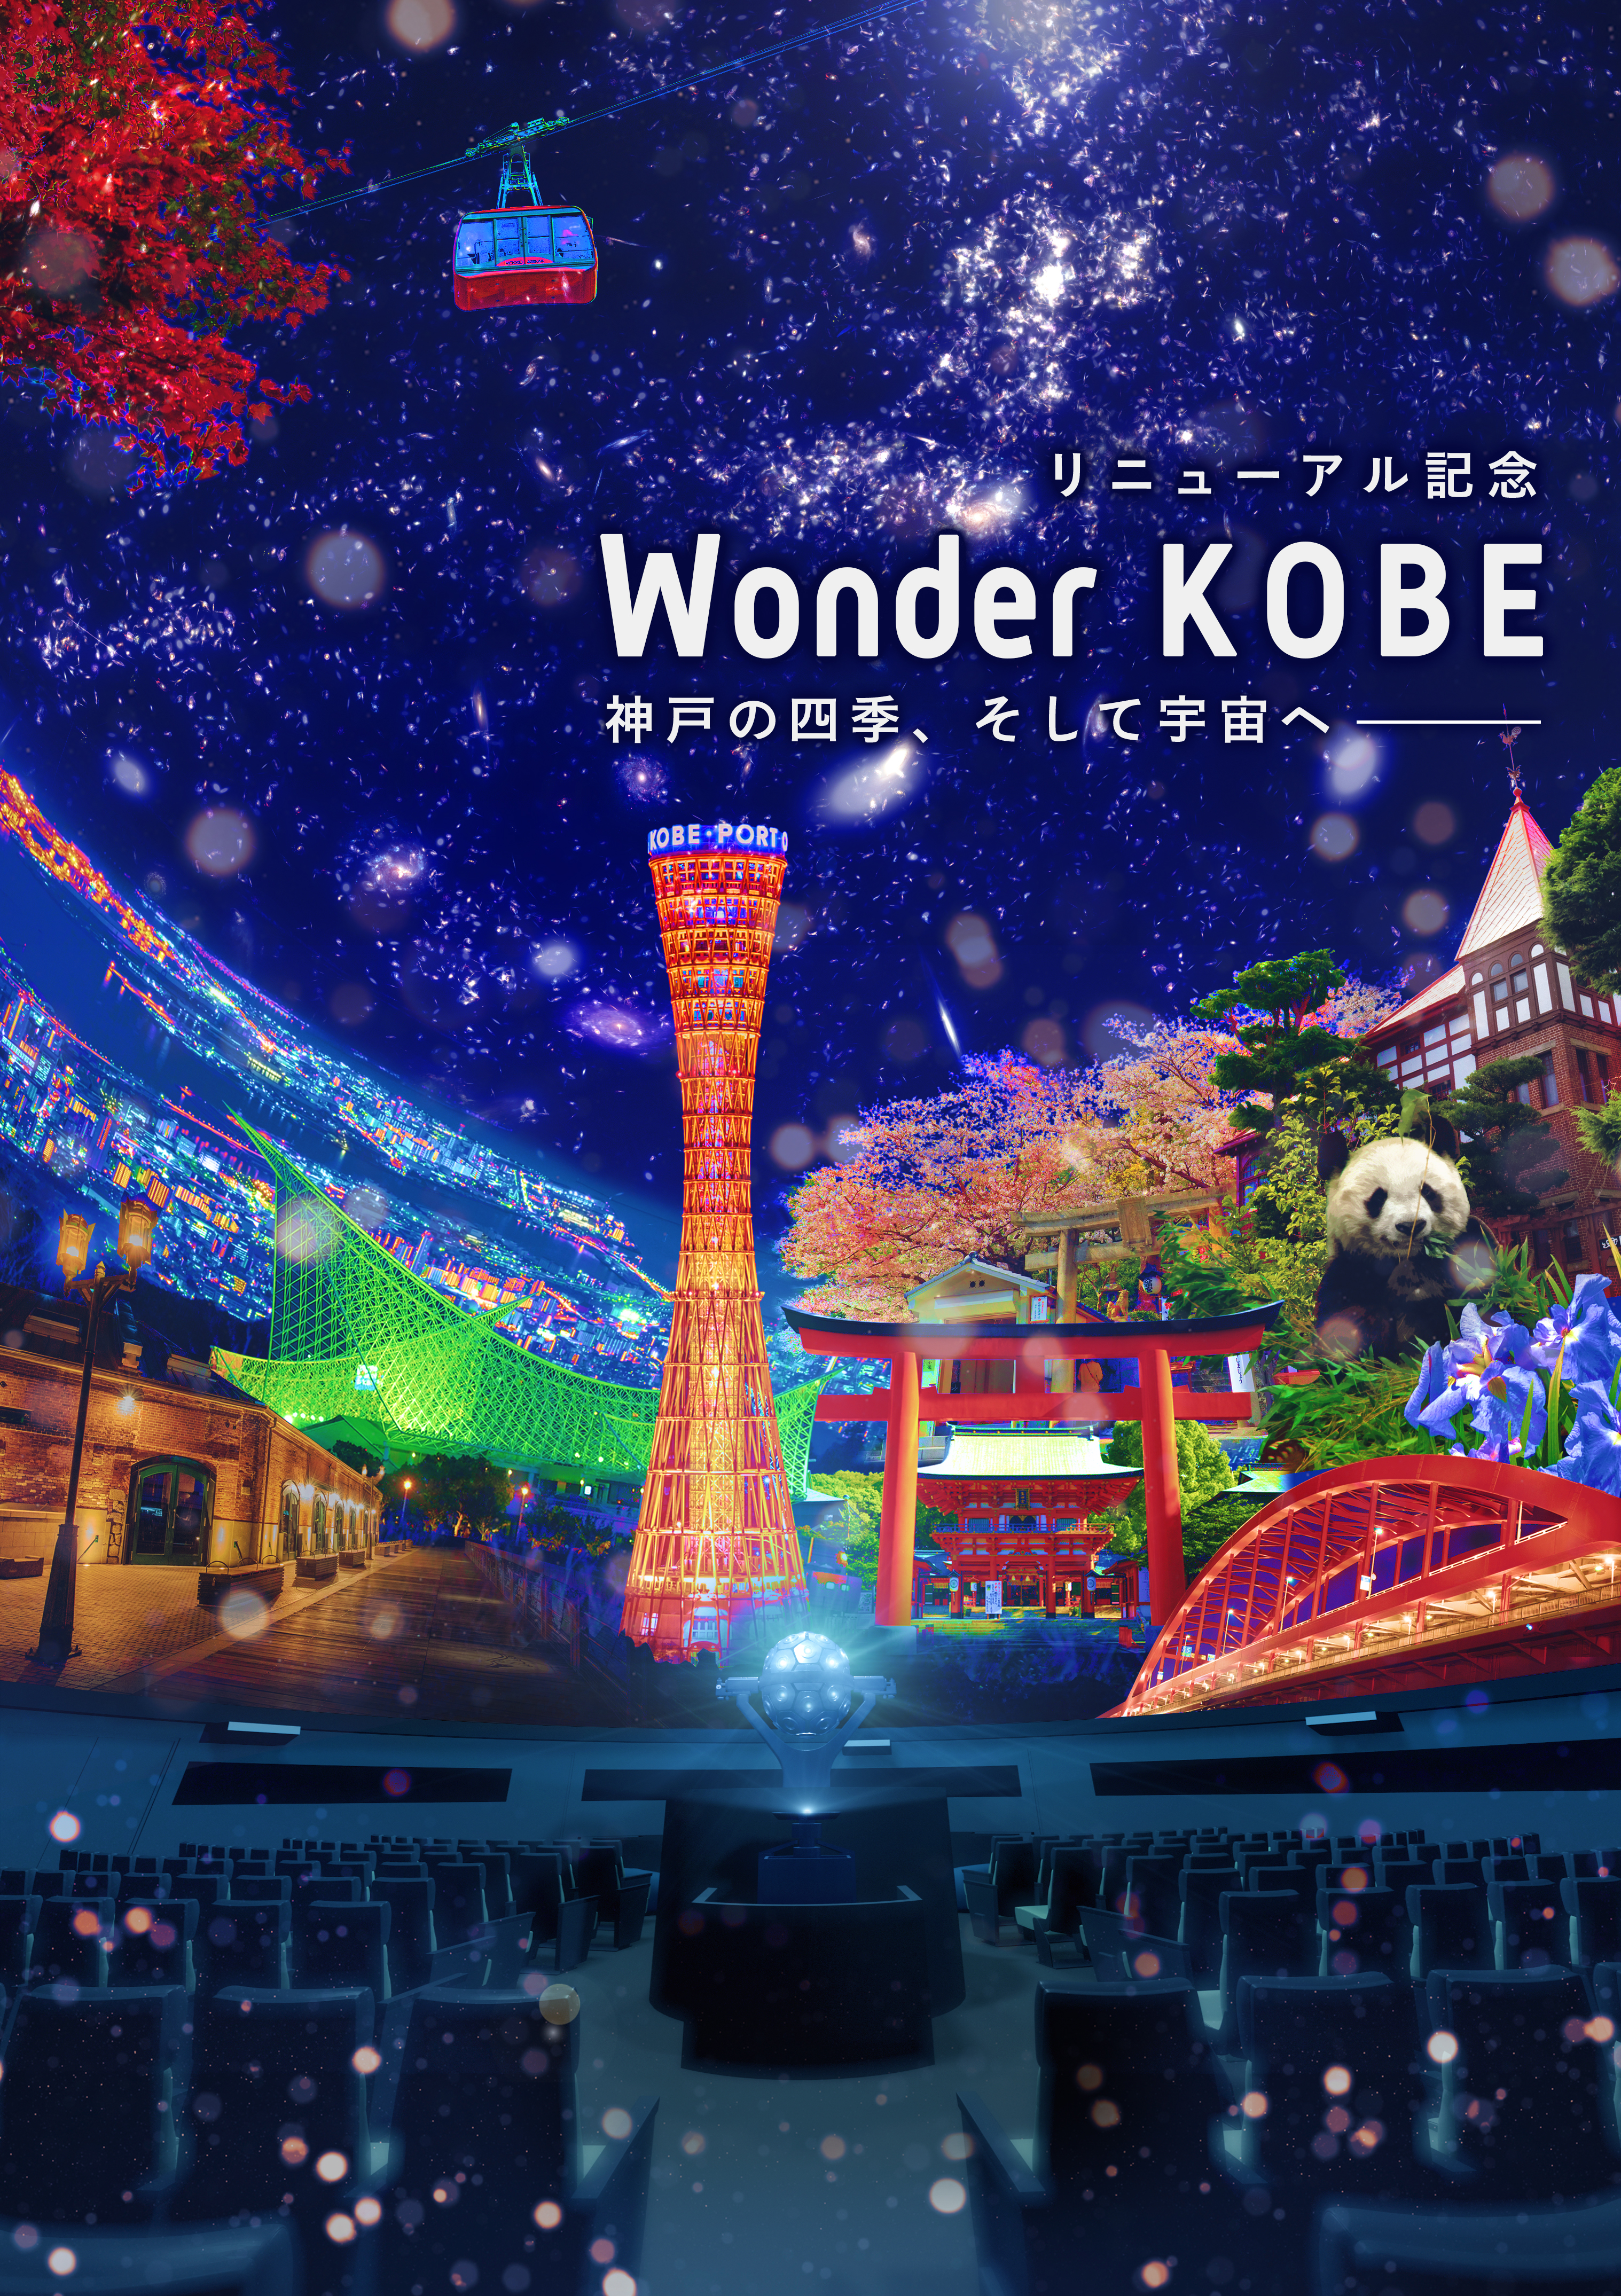 Wonder KOBE 神戸の四季、そして宇宙へ